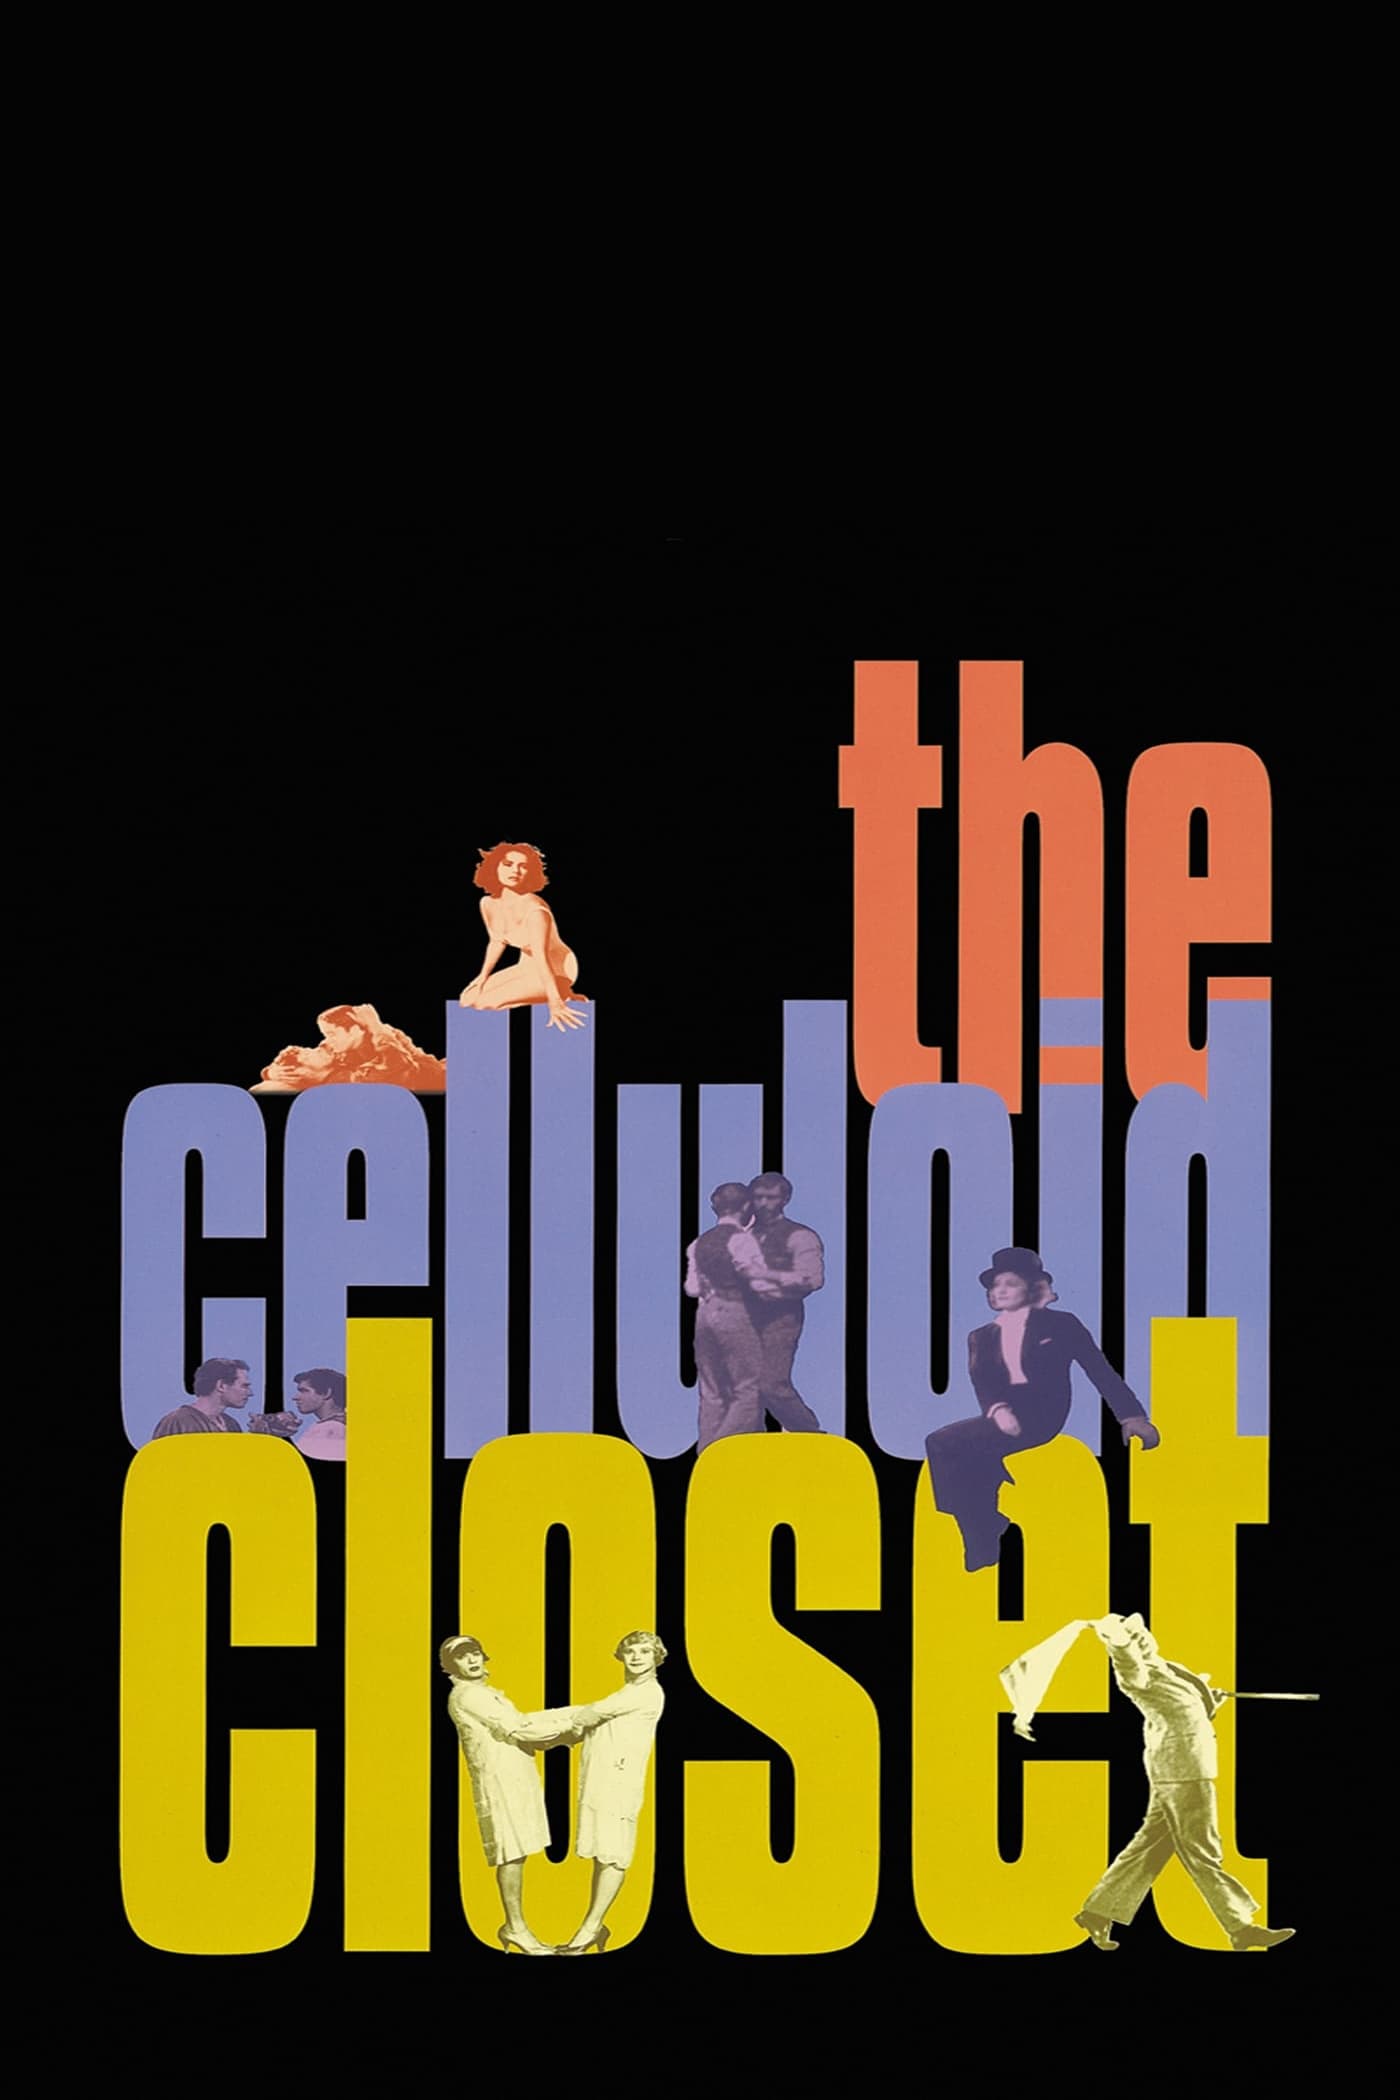 The Celluloid Closet (1996)